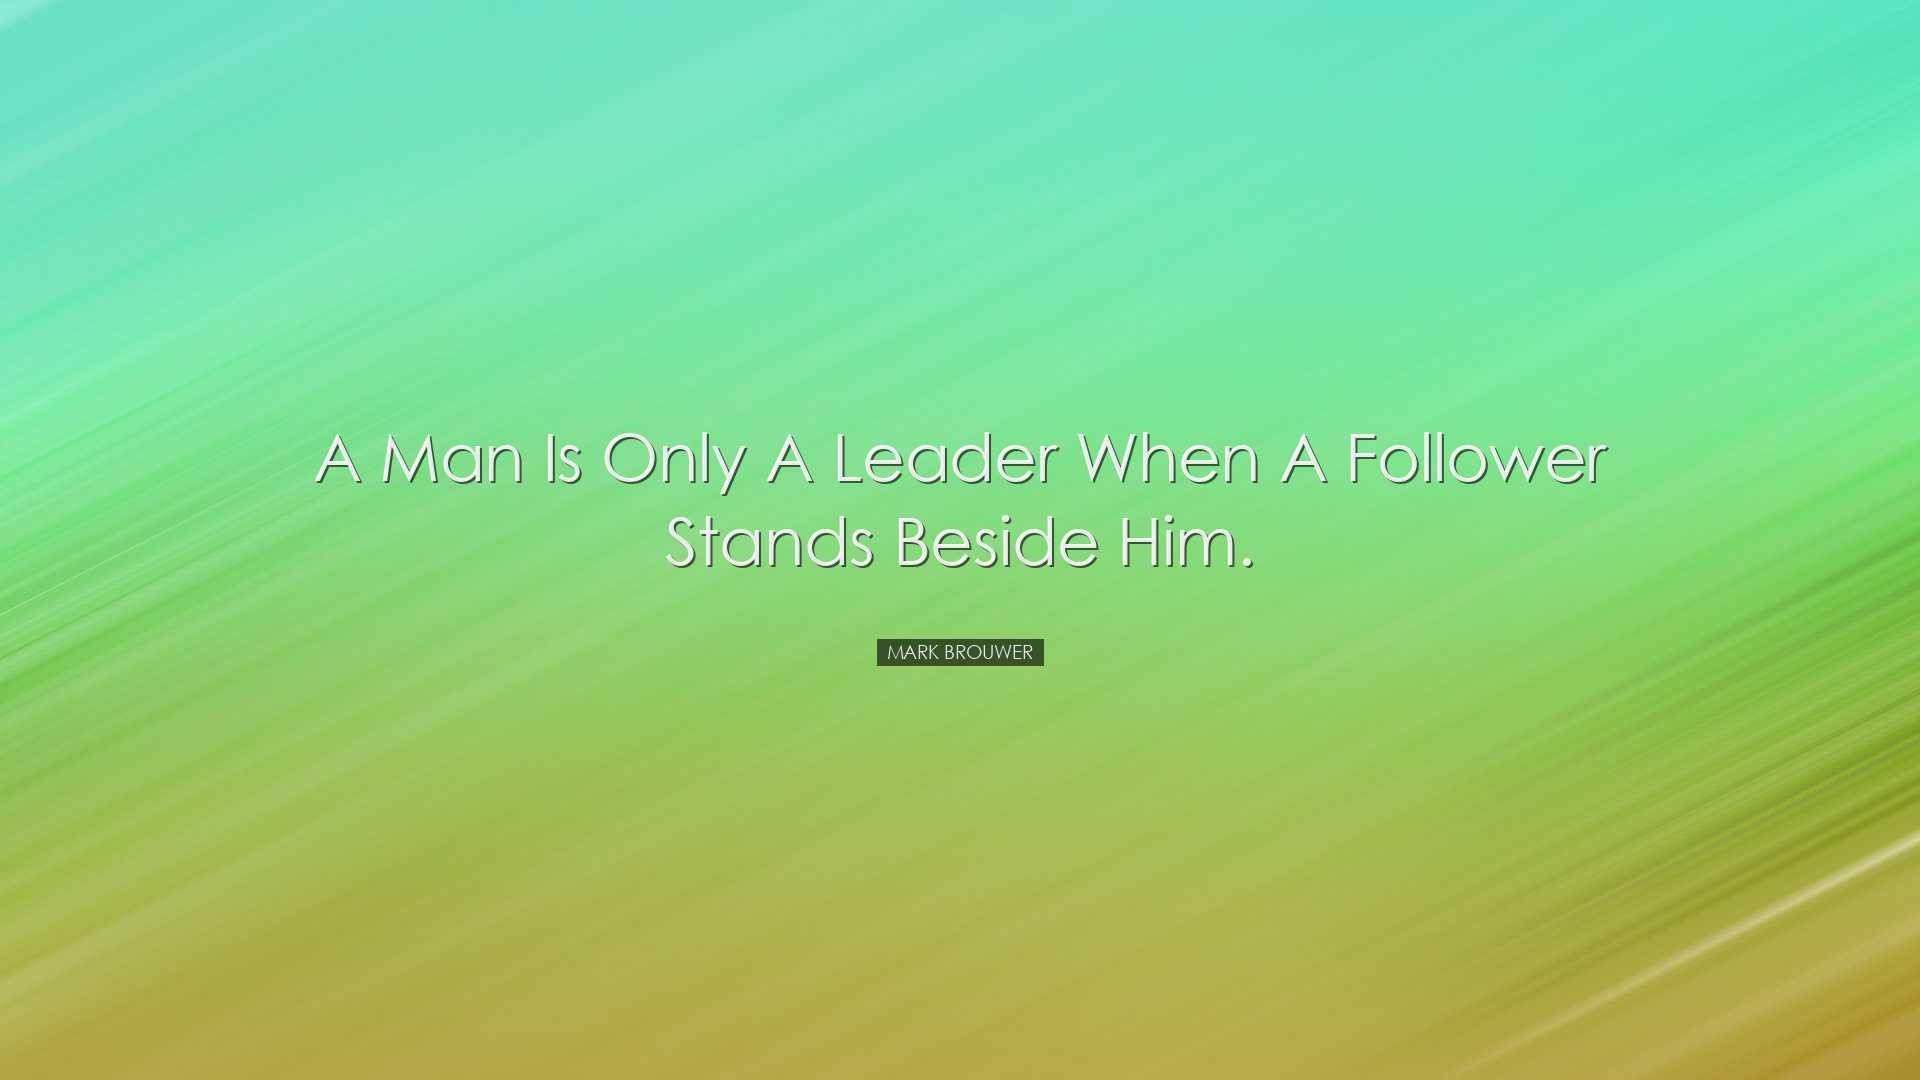 A man is only a leader when a follower stands beside him. - Mark B